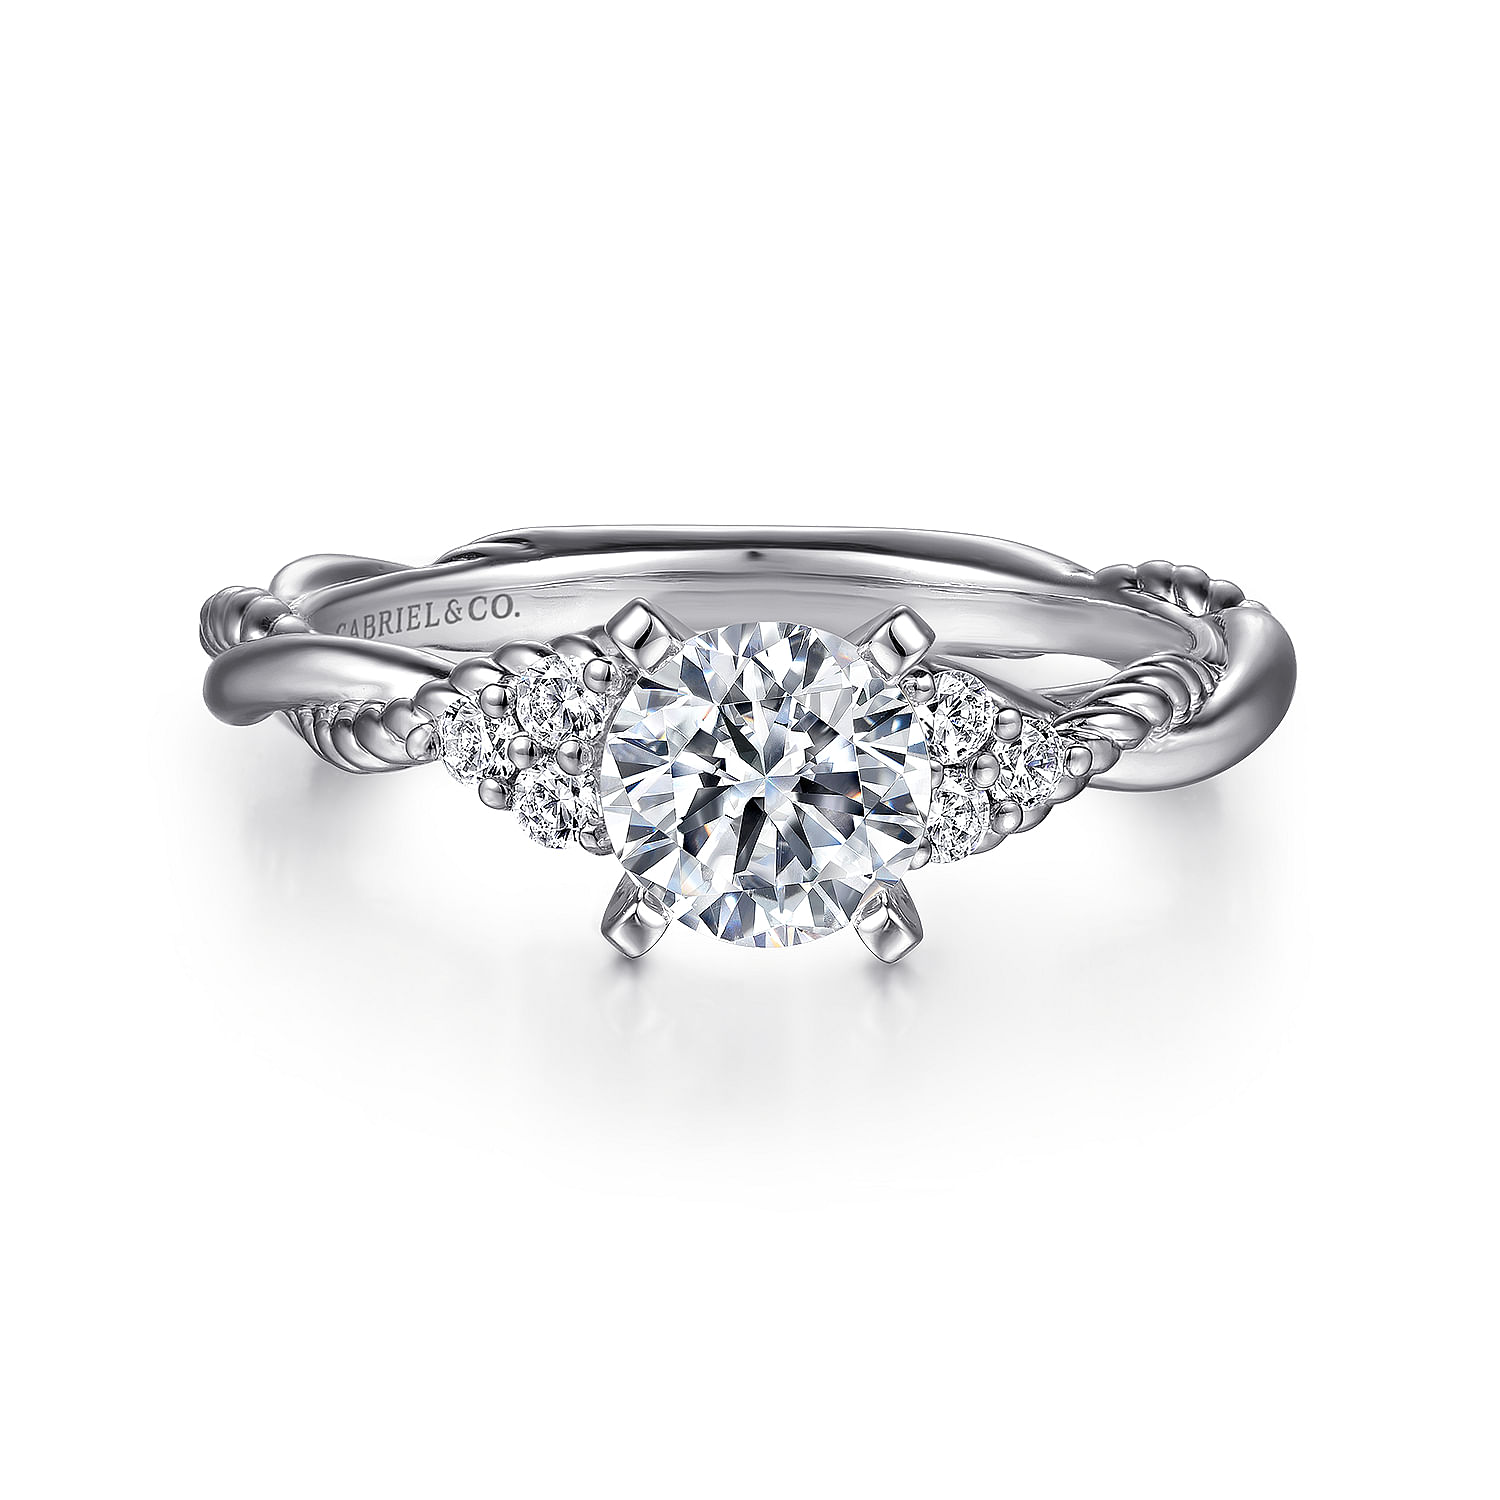 https://images.gabrielny.com/is/image/GabrielCo/Gabriel-14K-White-Gold-Round-Twisted-Diamond-Engagement-Ring~ER8817W44JJ-1.jpg